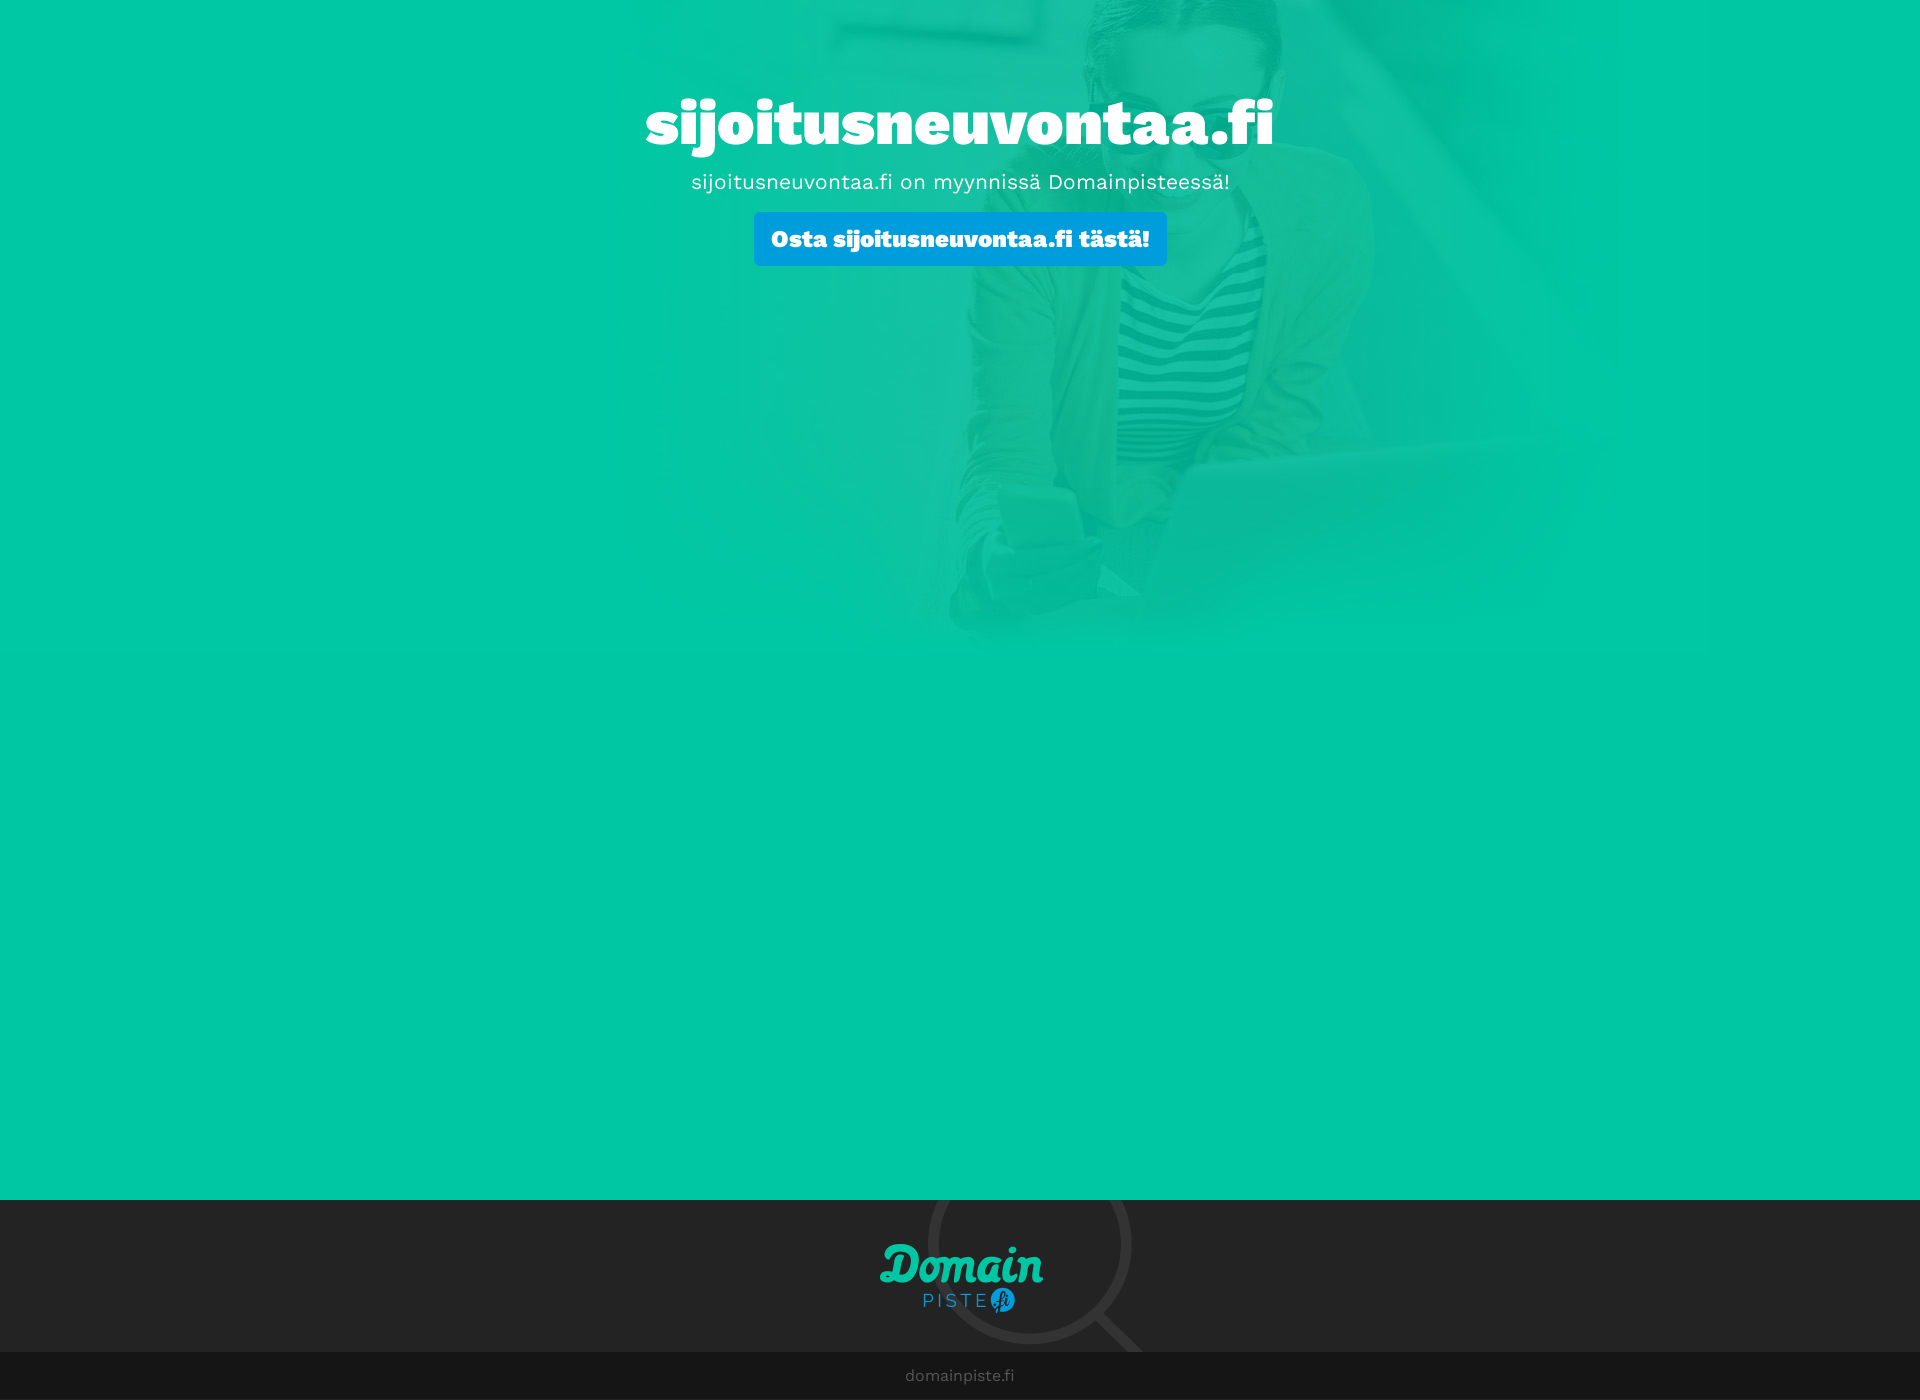 Screenshot for sijoitusneuvontaa.fi